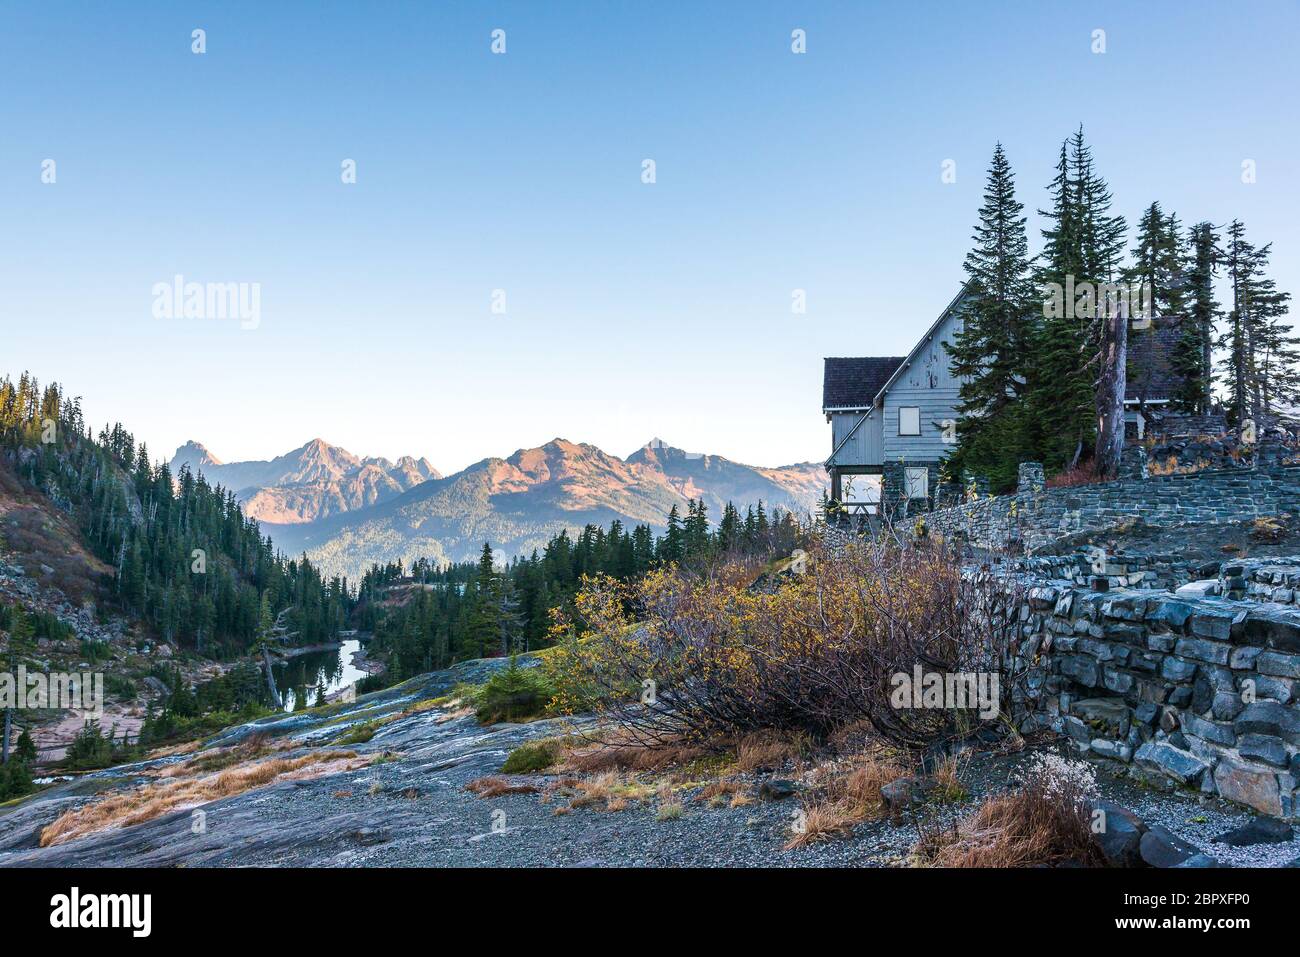 White Salmon Lodge, vista panoramica sul Monte Baker Snoqualmie National Forest Park, Washington, USA. Foto Stock